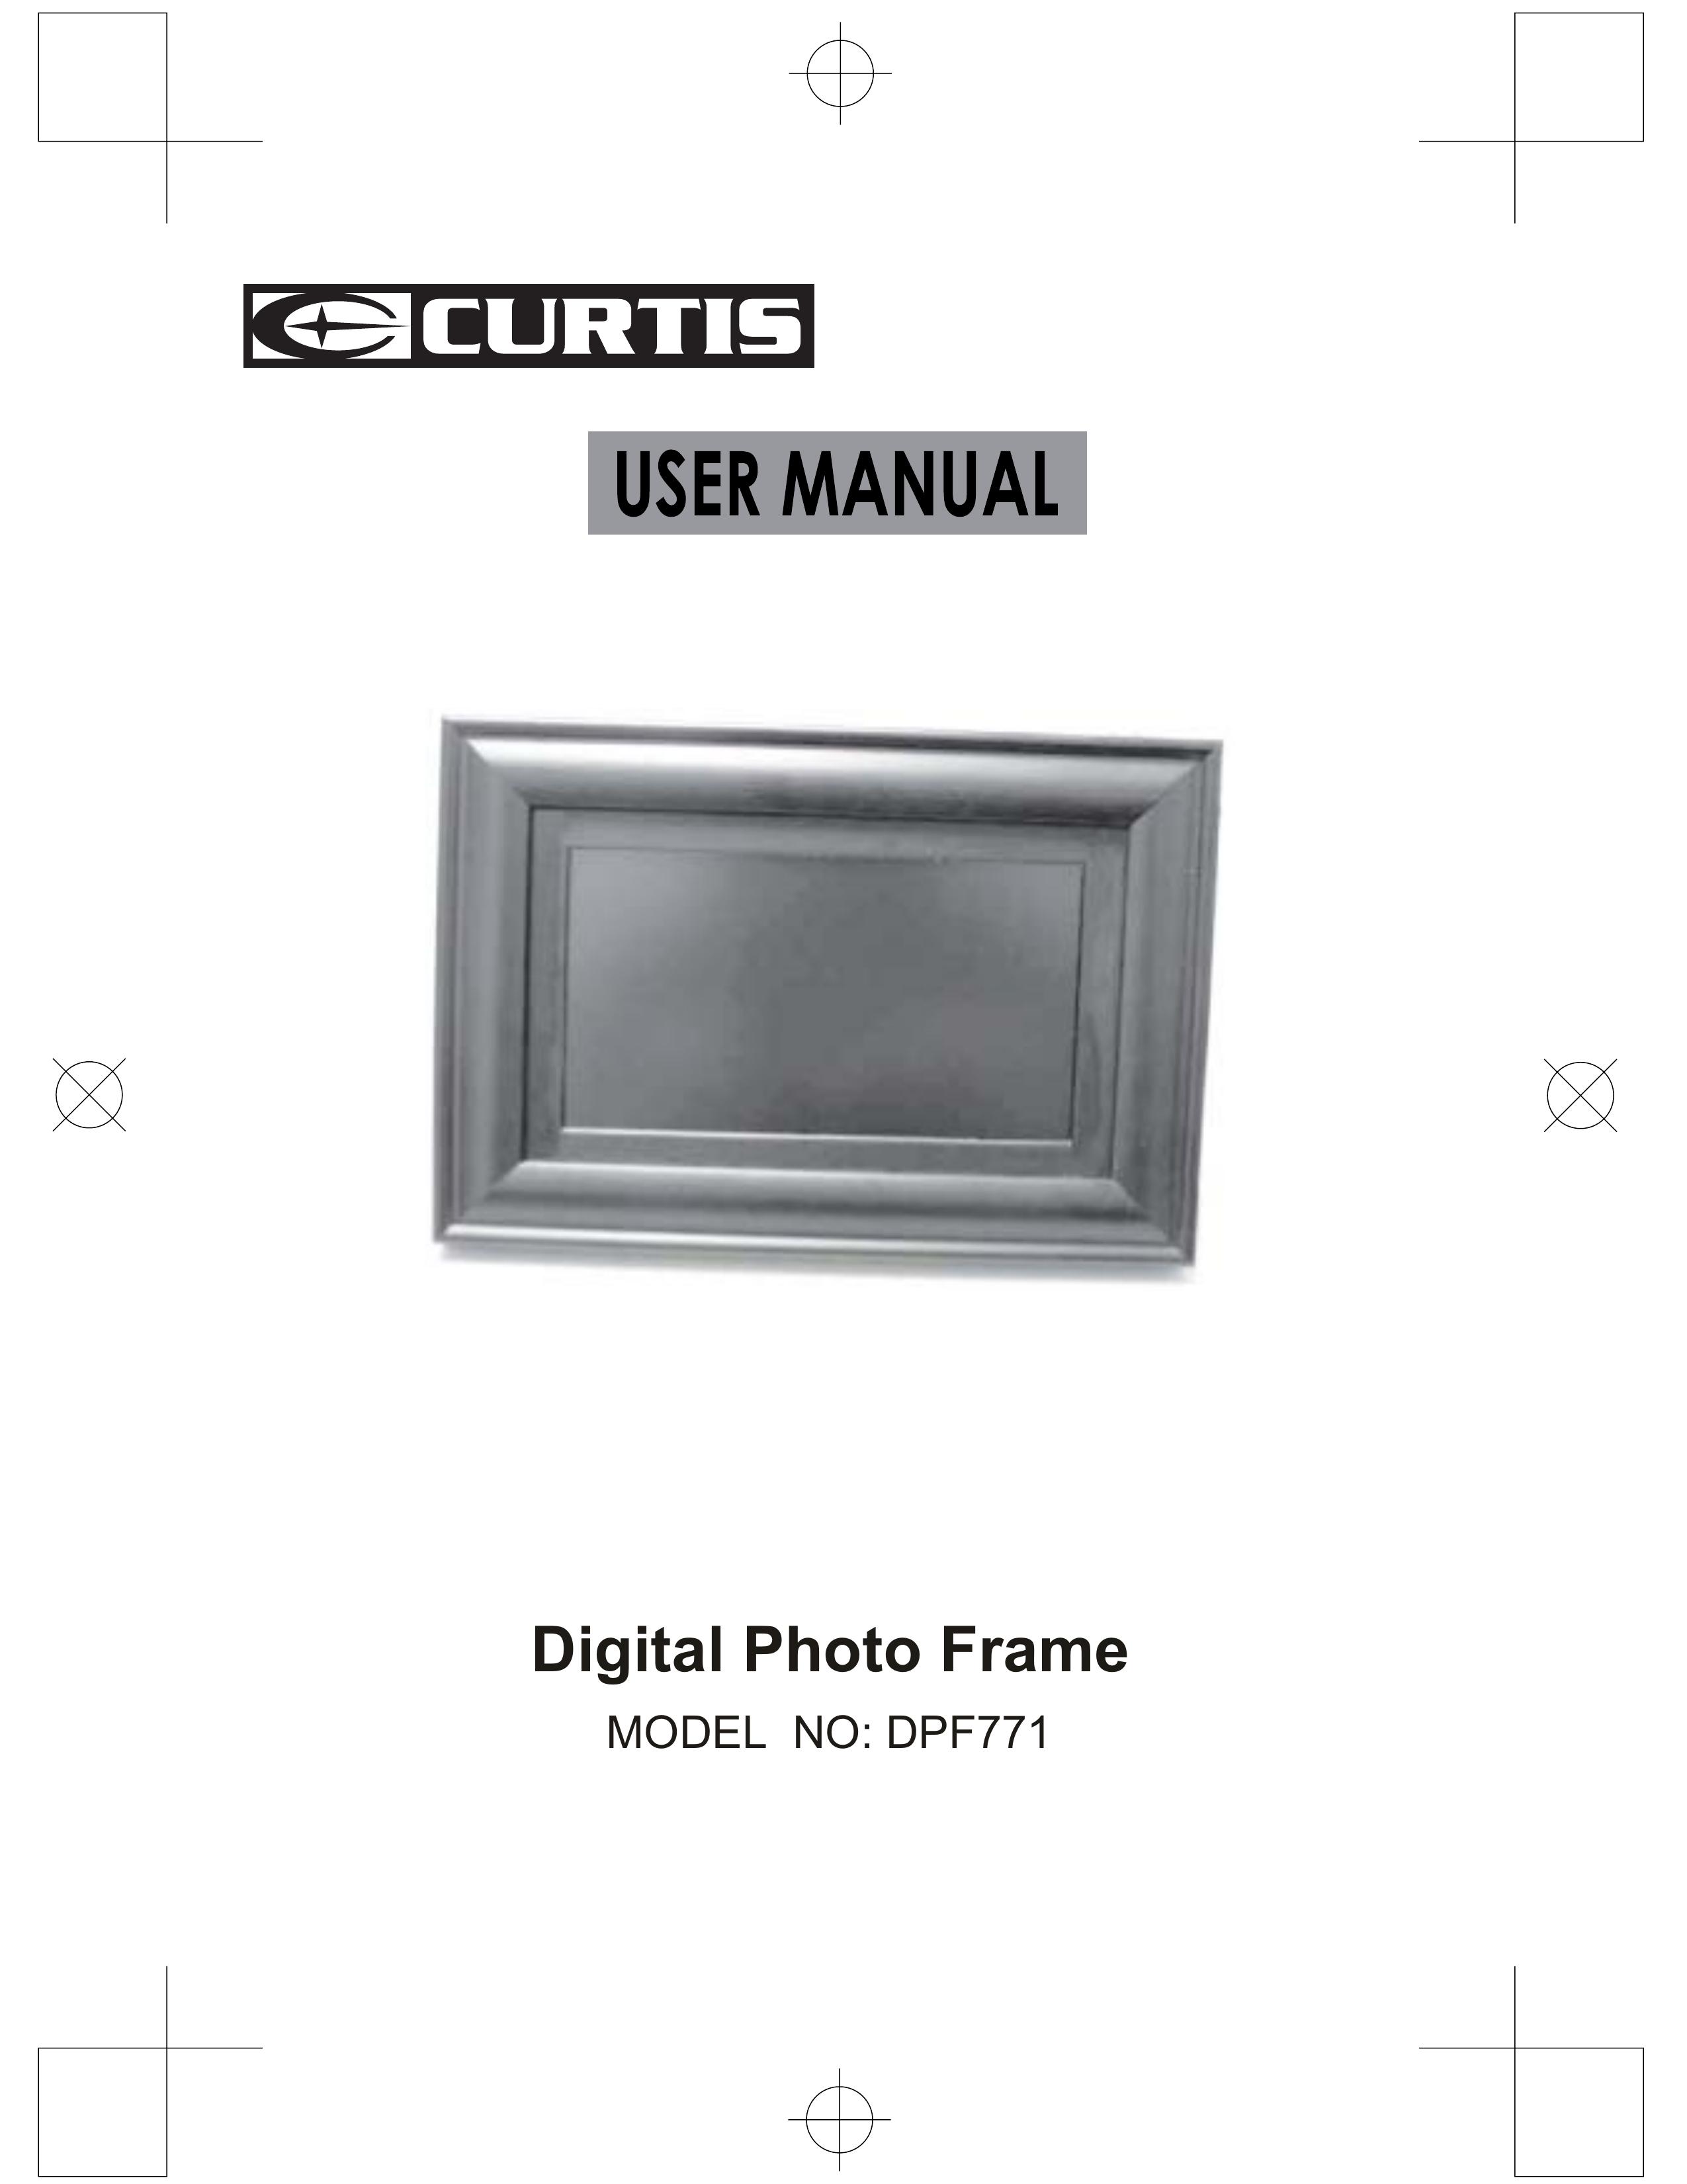 Curtis DPF771 Digital Photo Frame User Manual